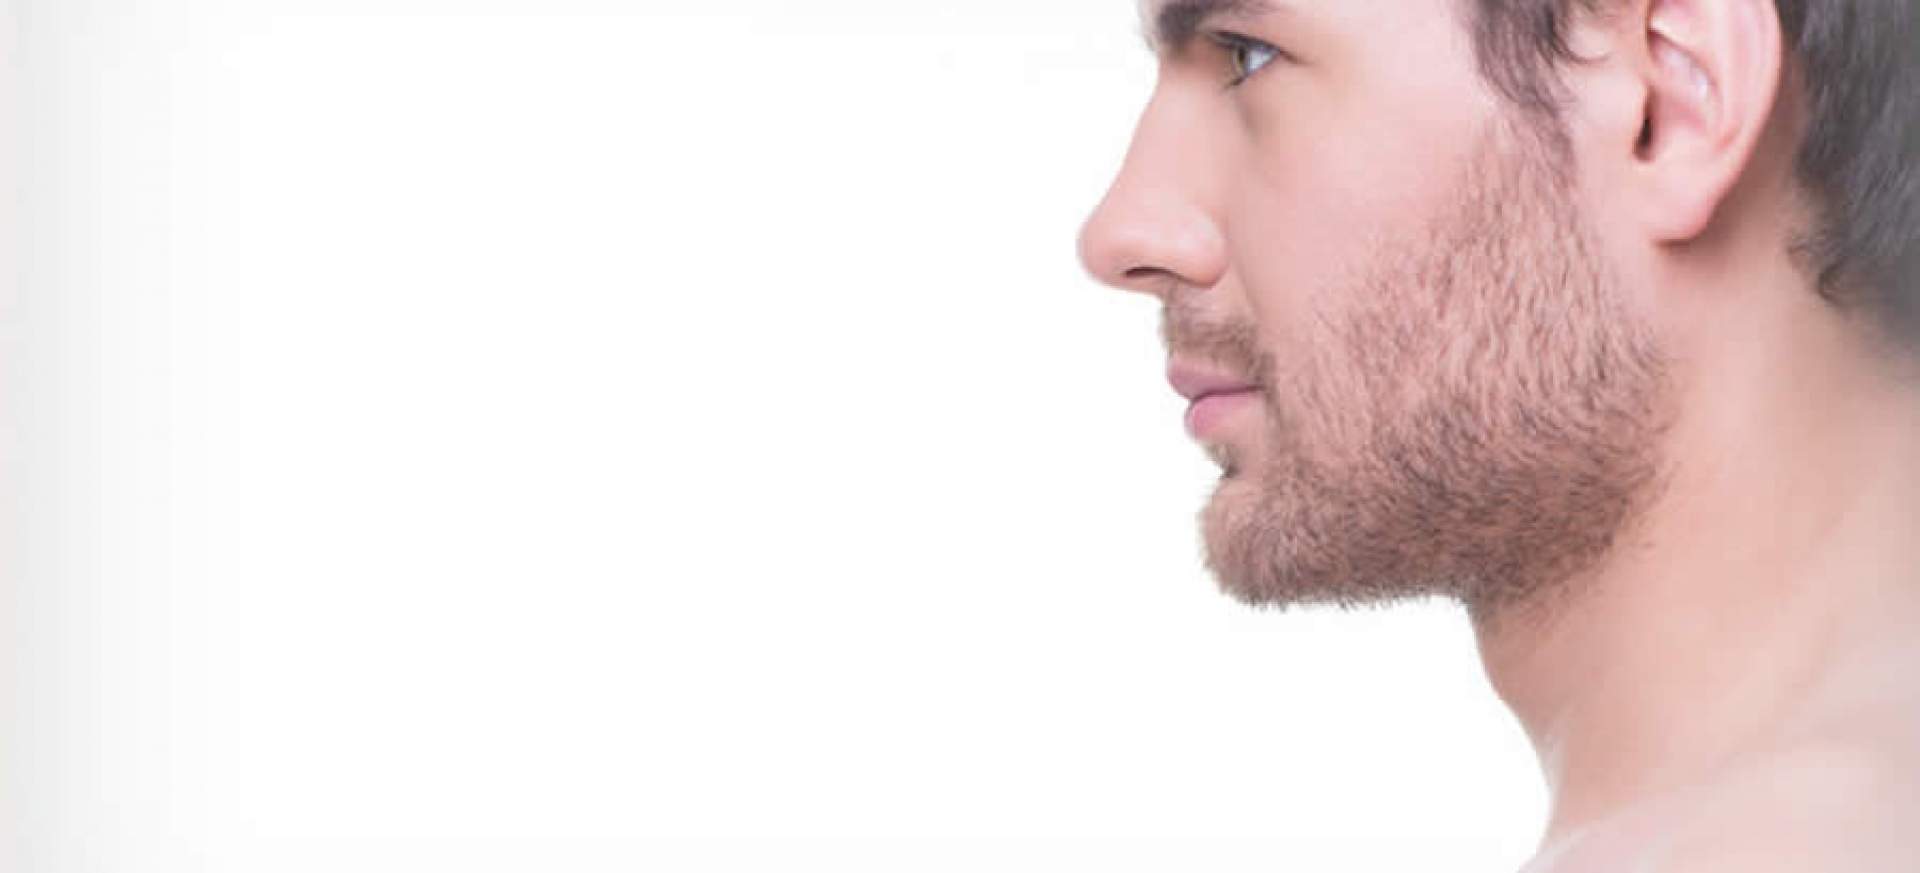 Rinoplastia Masculina: como funciona a cirurgia de nariz para os homens?